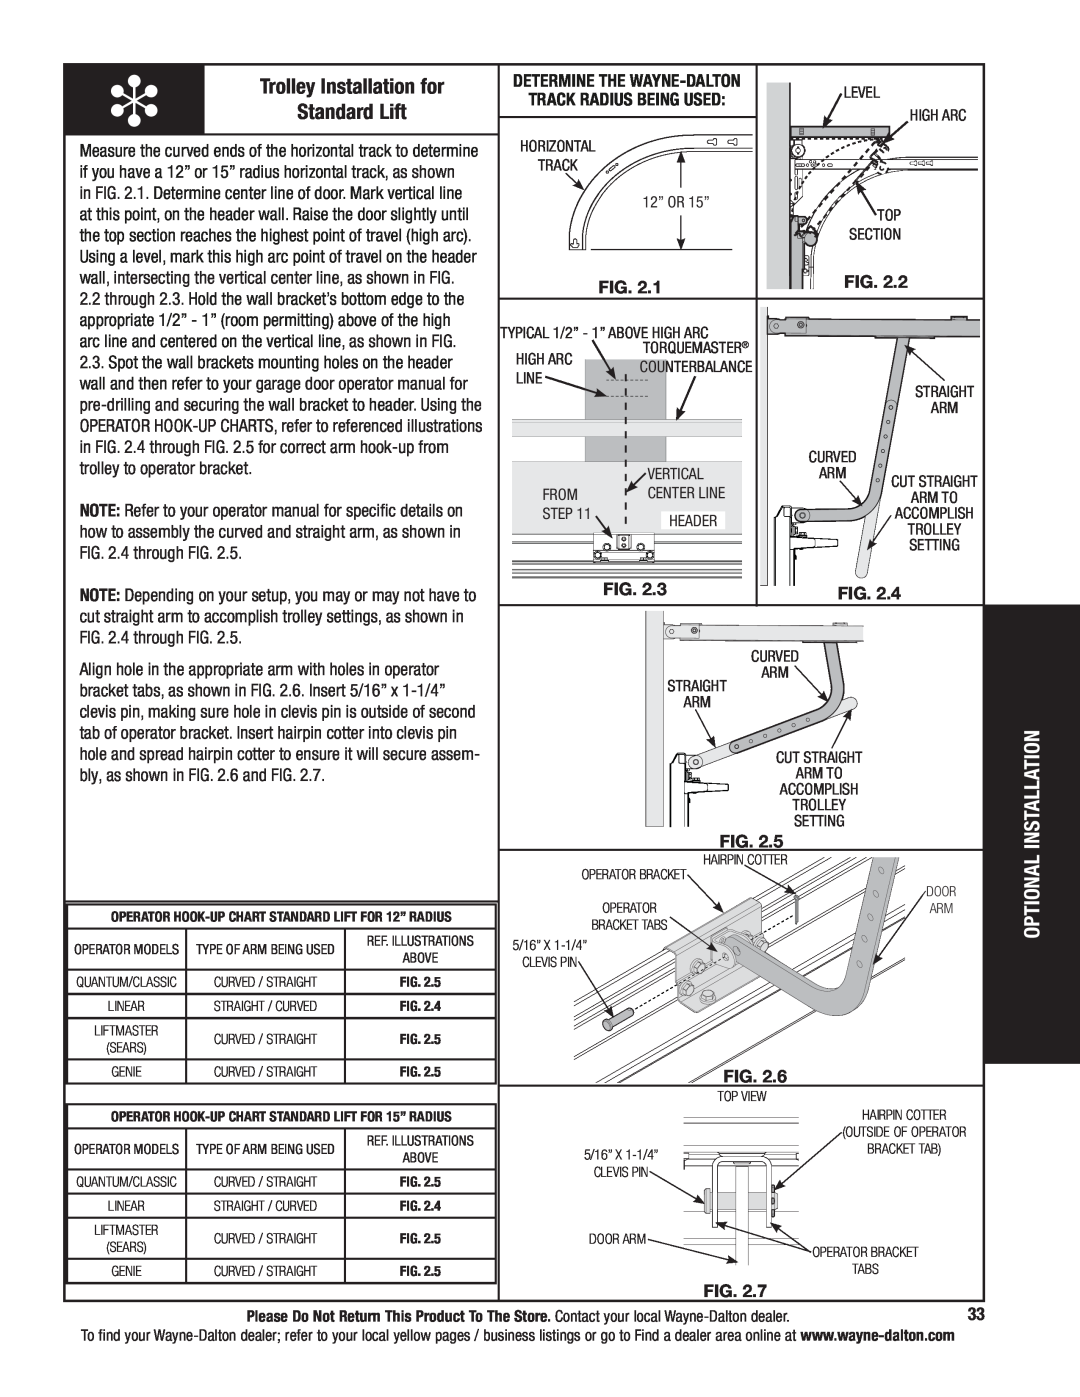 Wayne-Dalton 5120, 5140 installation instructions Trolley Installation for, Standard Lift 